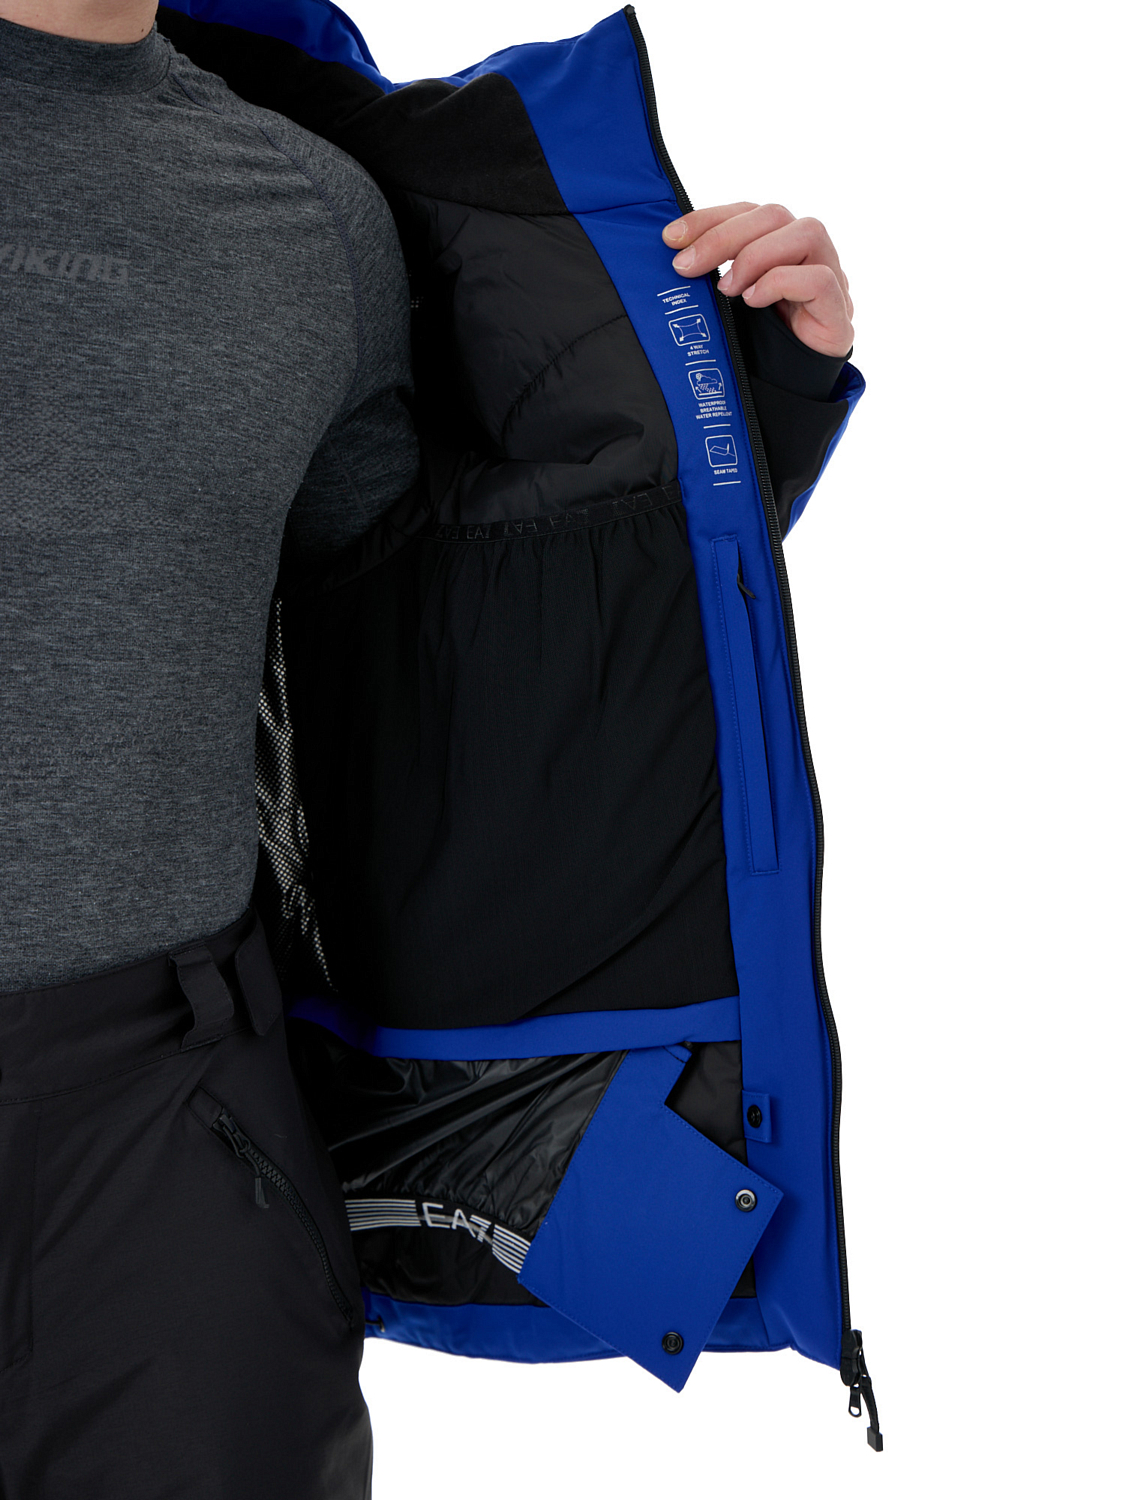 Куртка горнолыжная EA7 Emporio Armani Ski Kitzbuhel Protectum Colorblock New Royal Blue